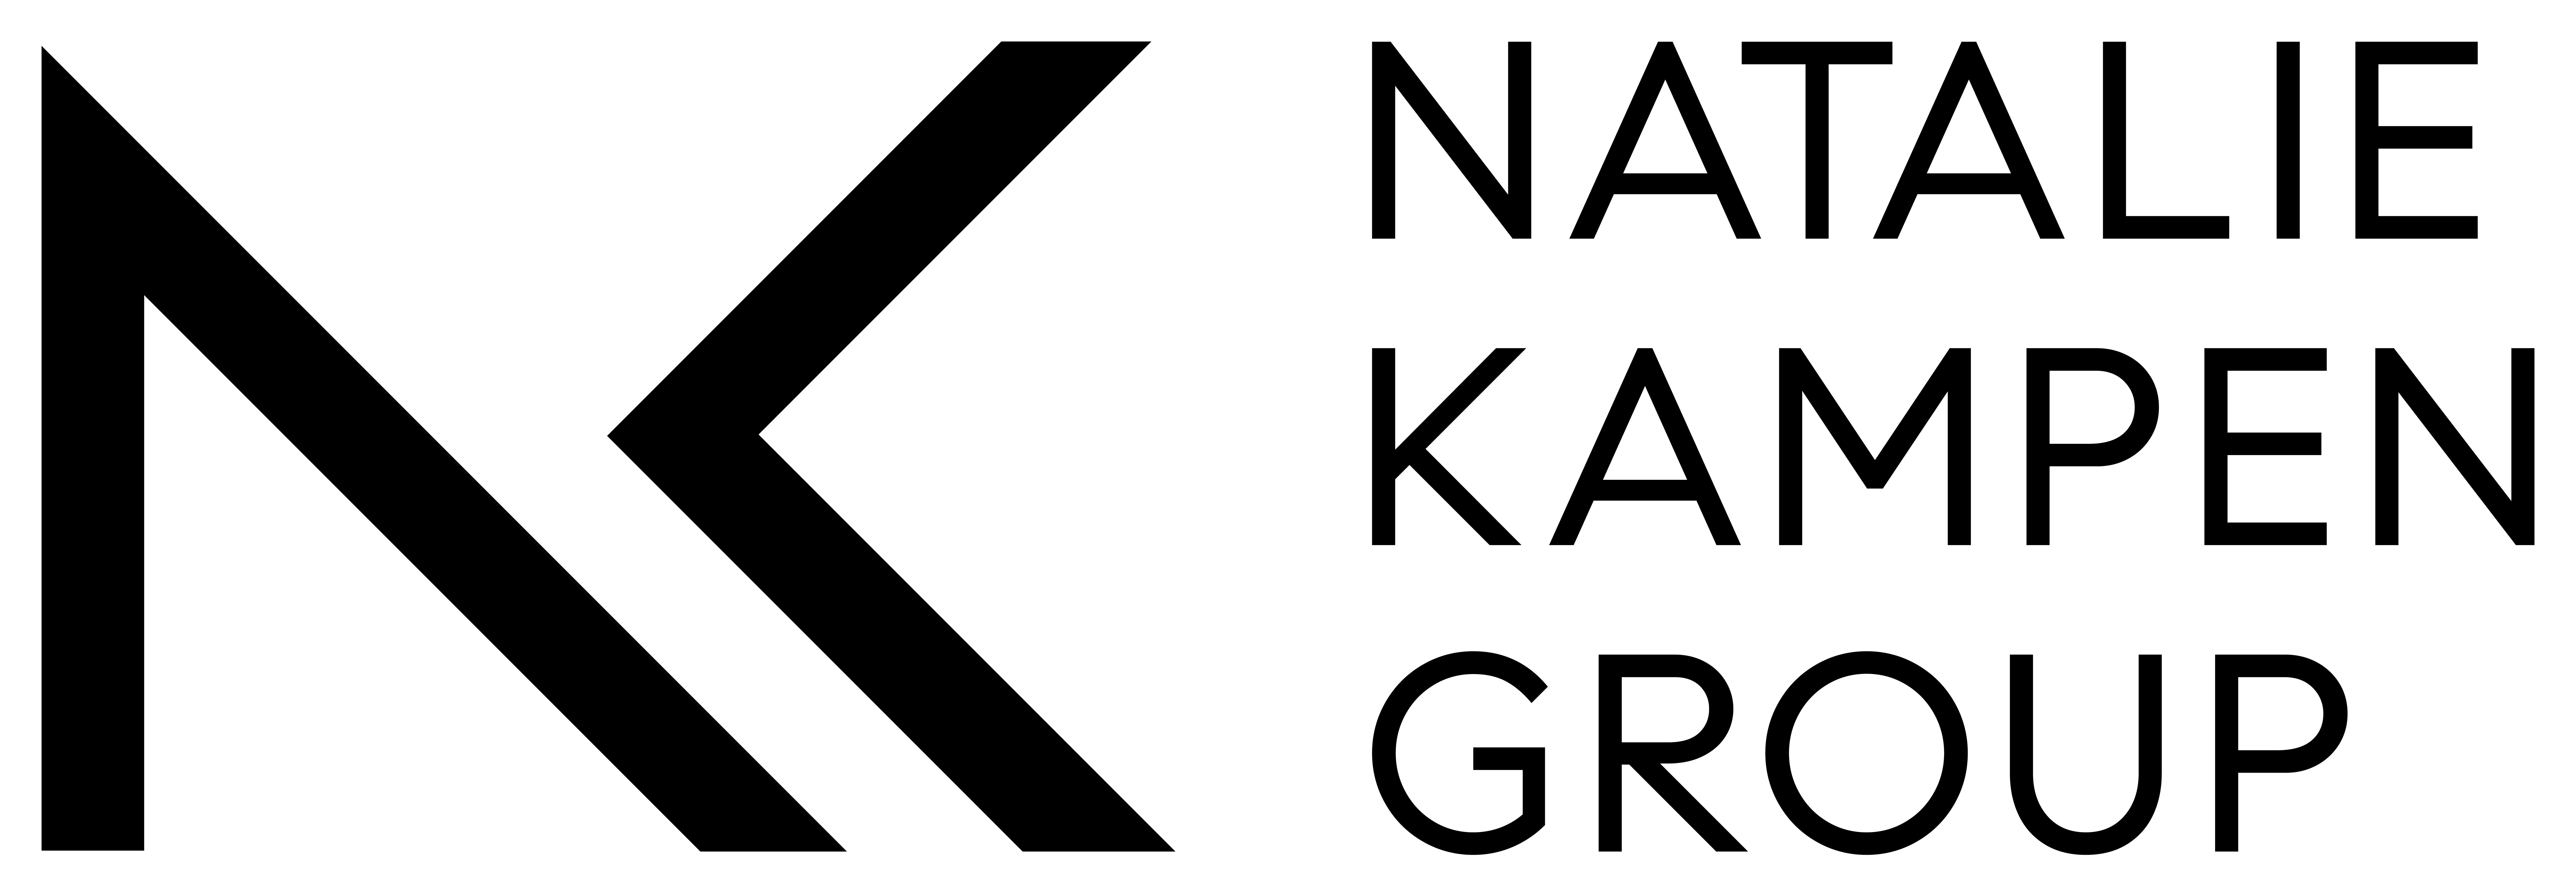 Natalie Kampen logo